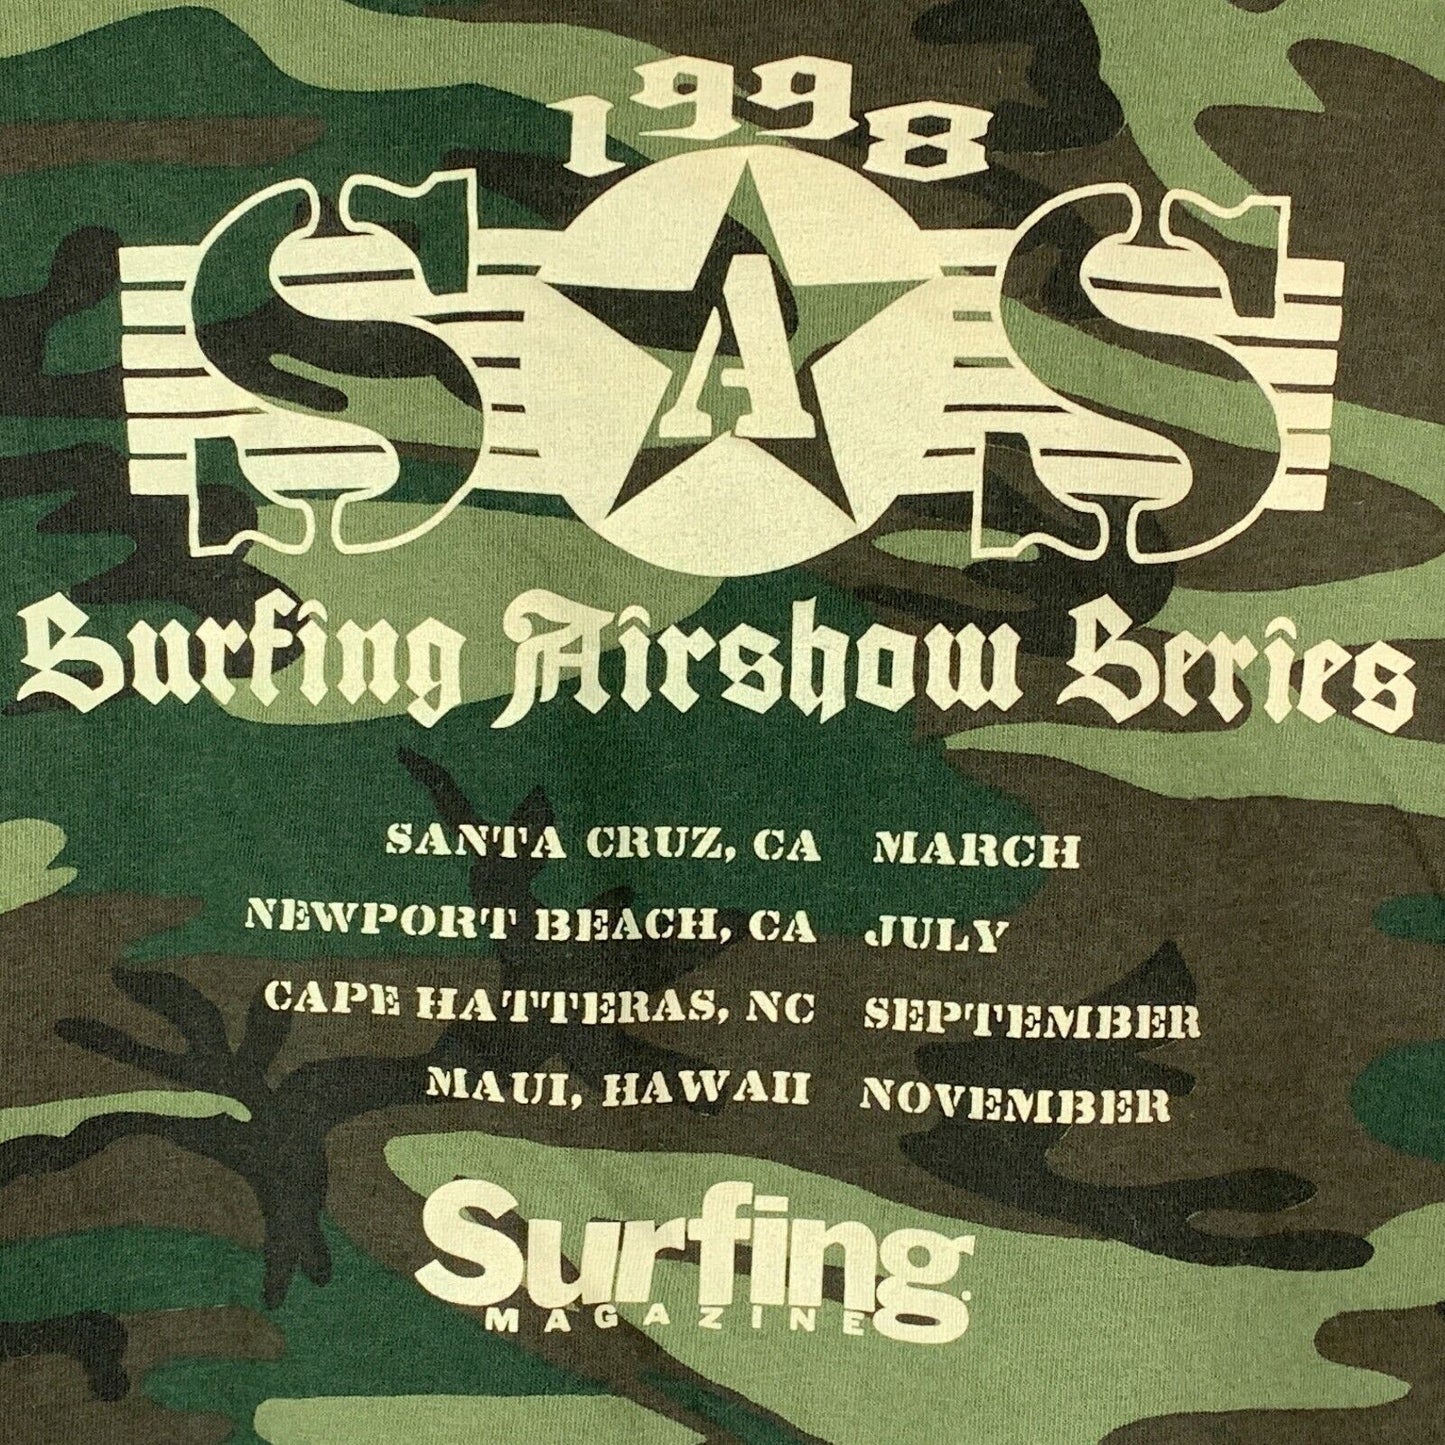 SAS Surfing Magazine Airshow Series Vintage 90s T Shirt Surfer Camouflage Large